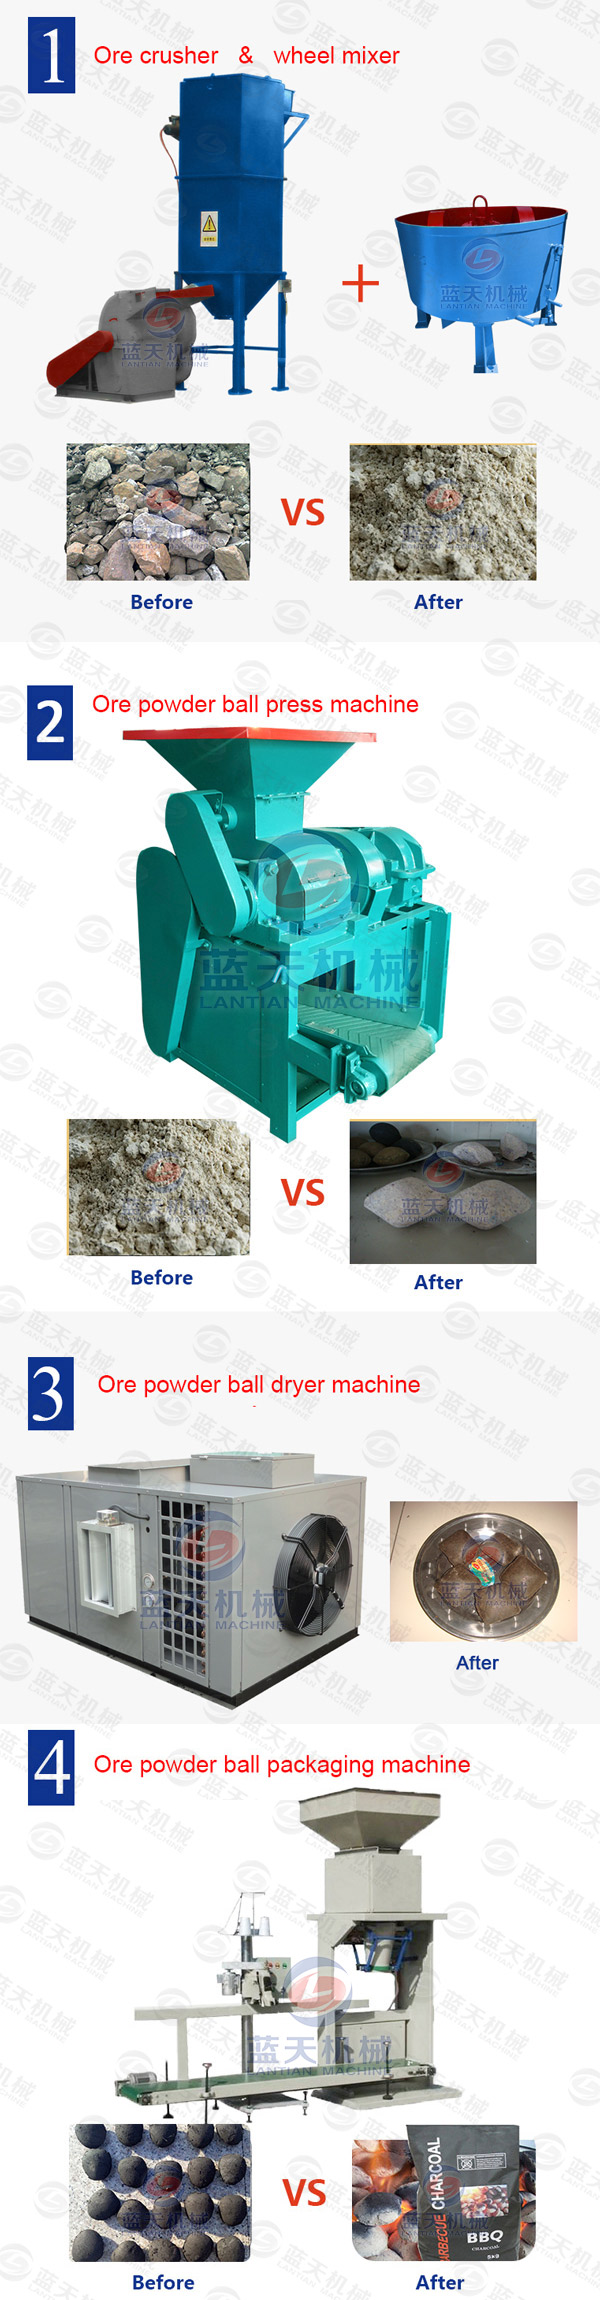 Product Line of Ore Powder Ball Press Machine